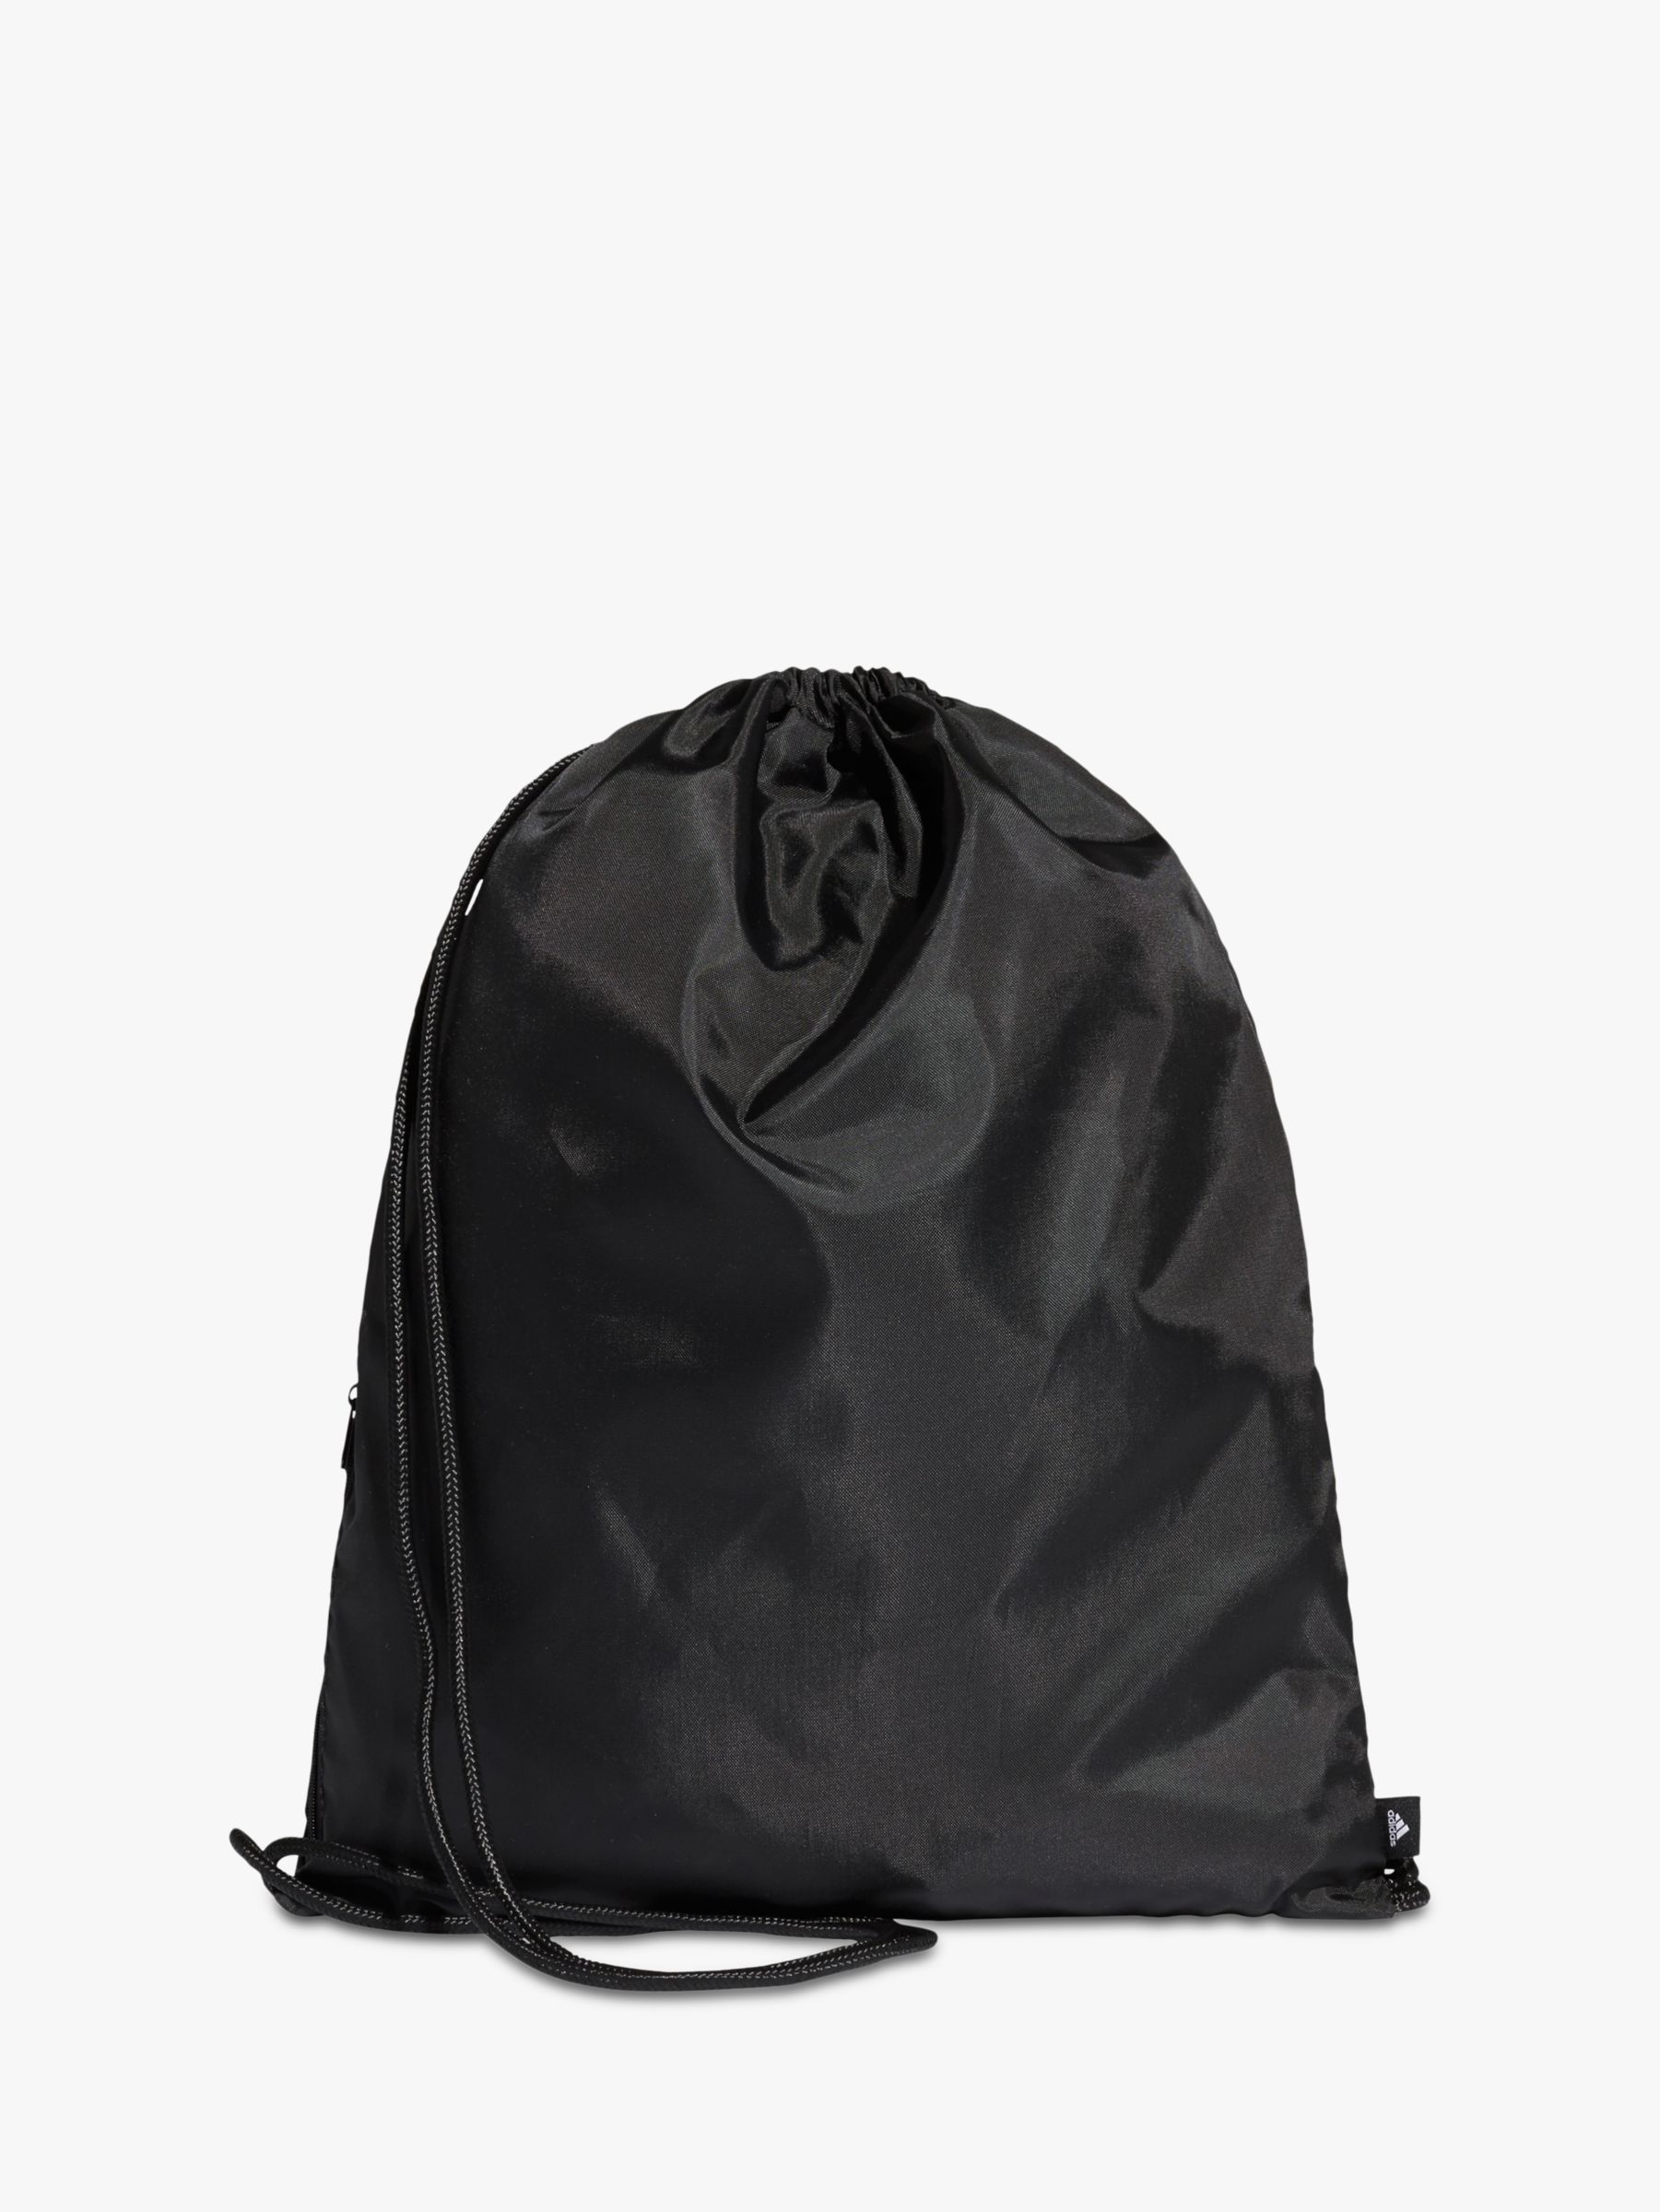 adidas Performance Logo Drawstring Bag, Black/White